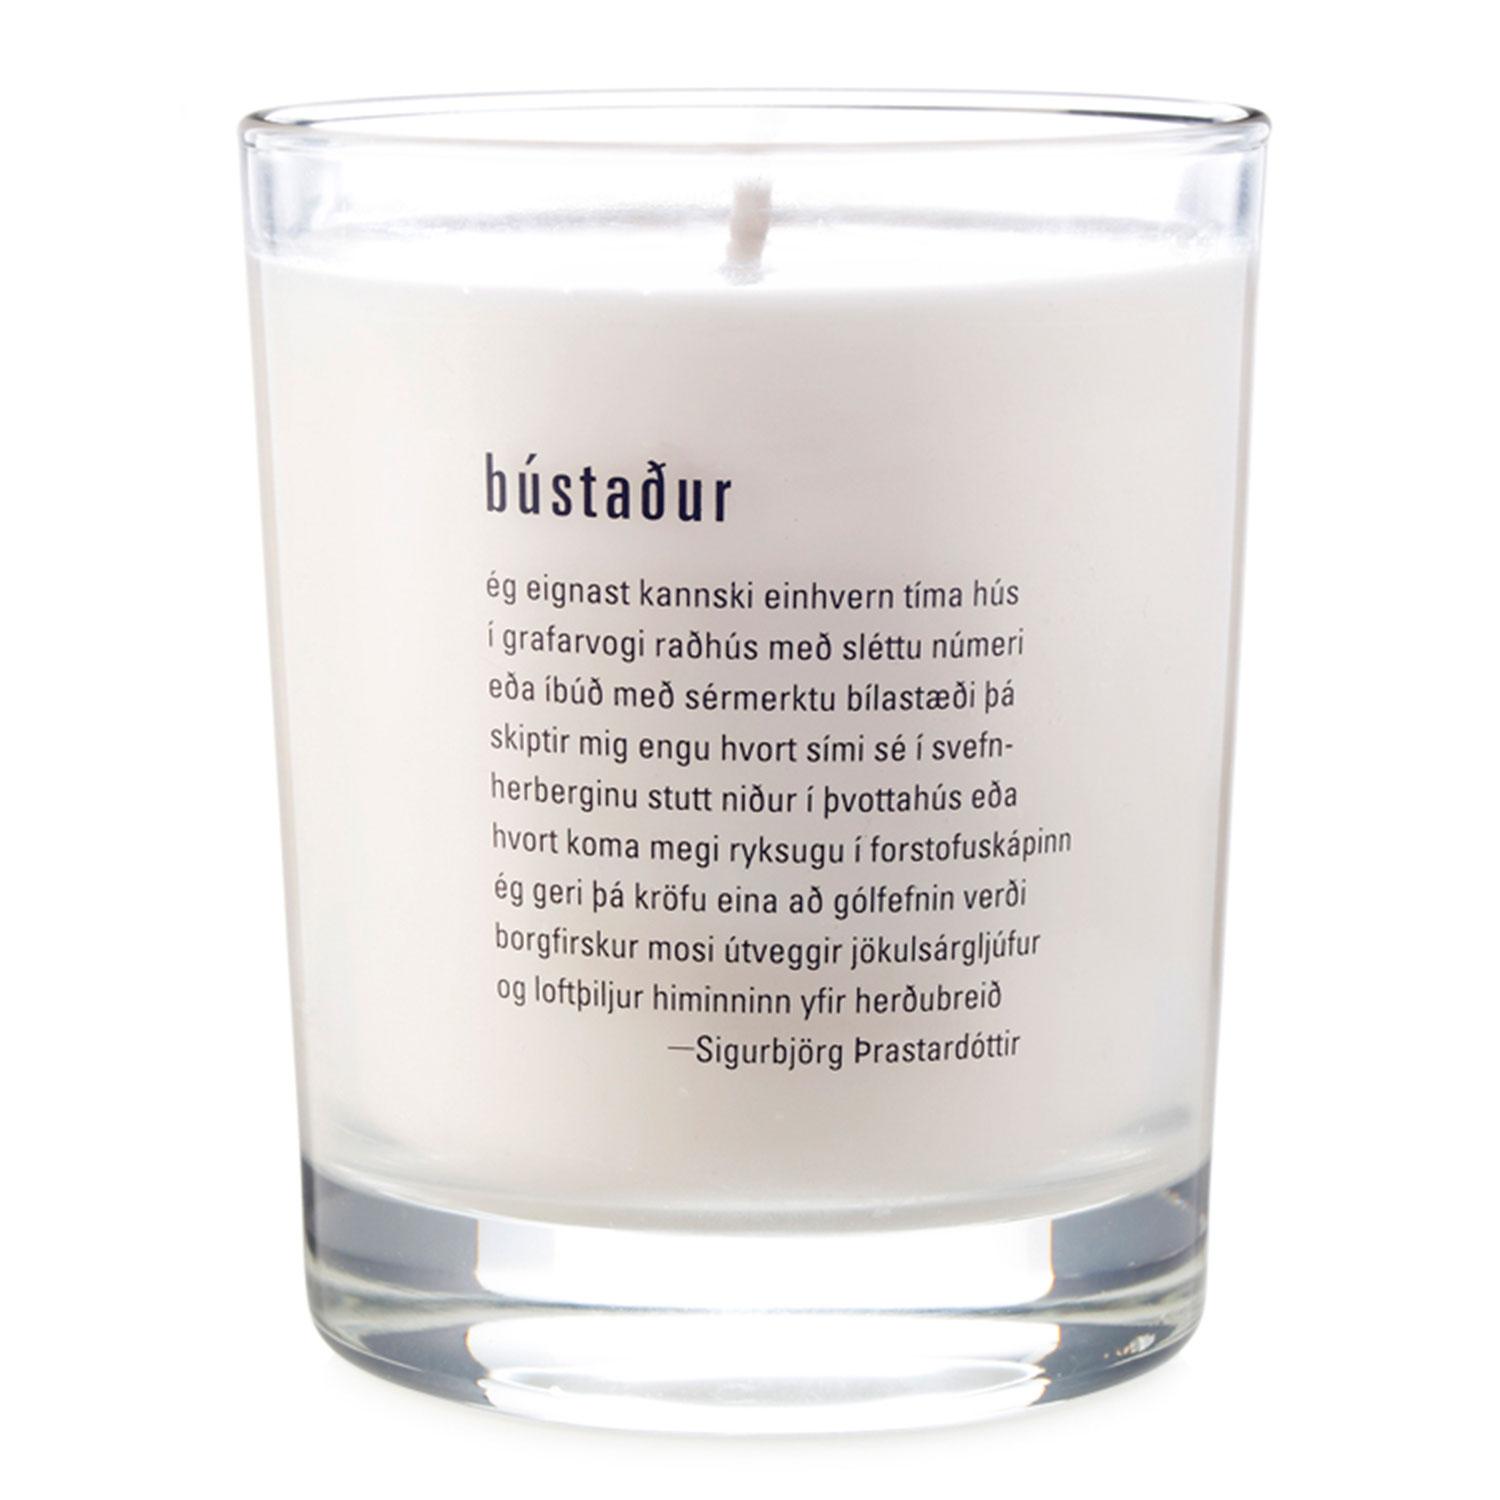 Sóley Scent - Bústaður Luxury candle